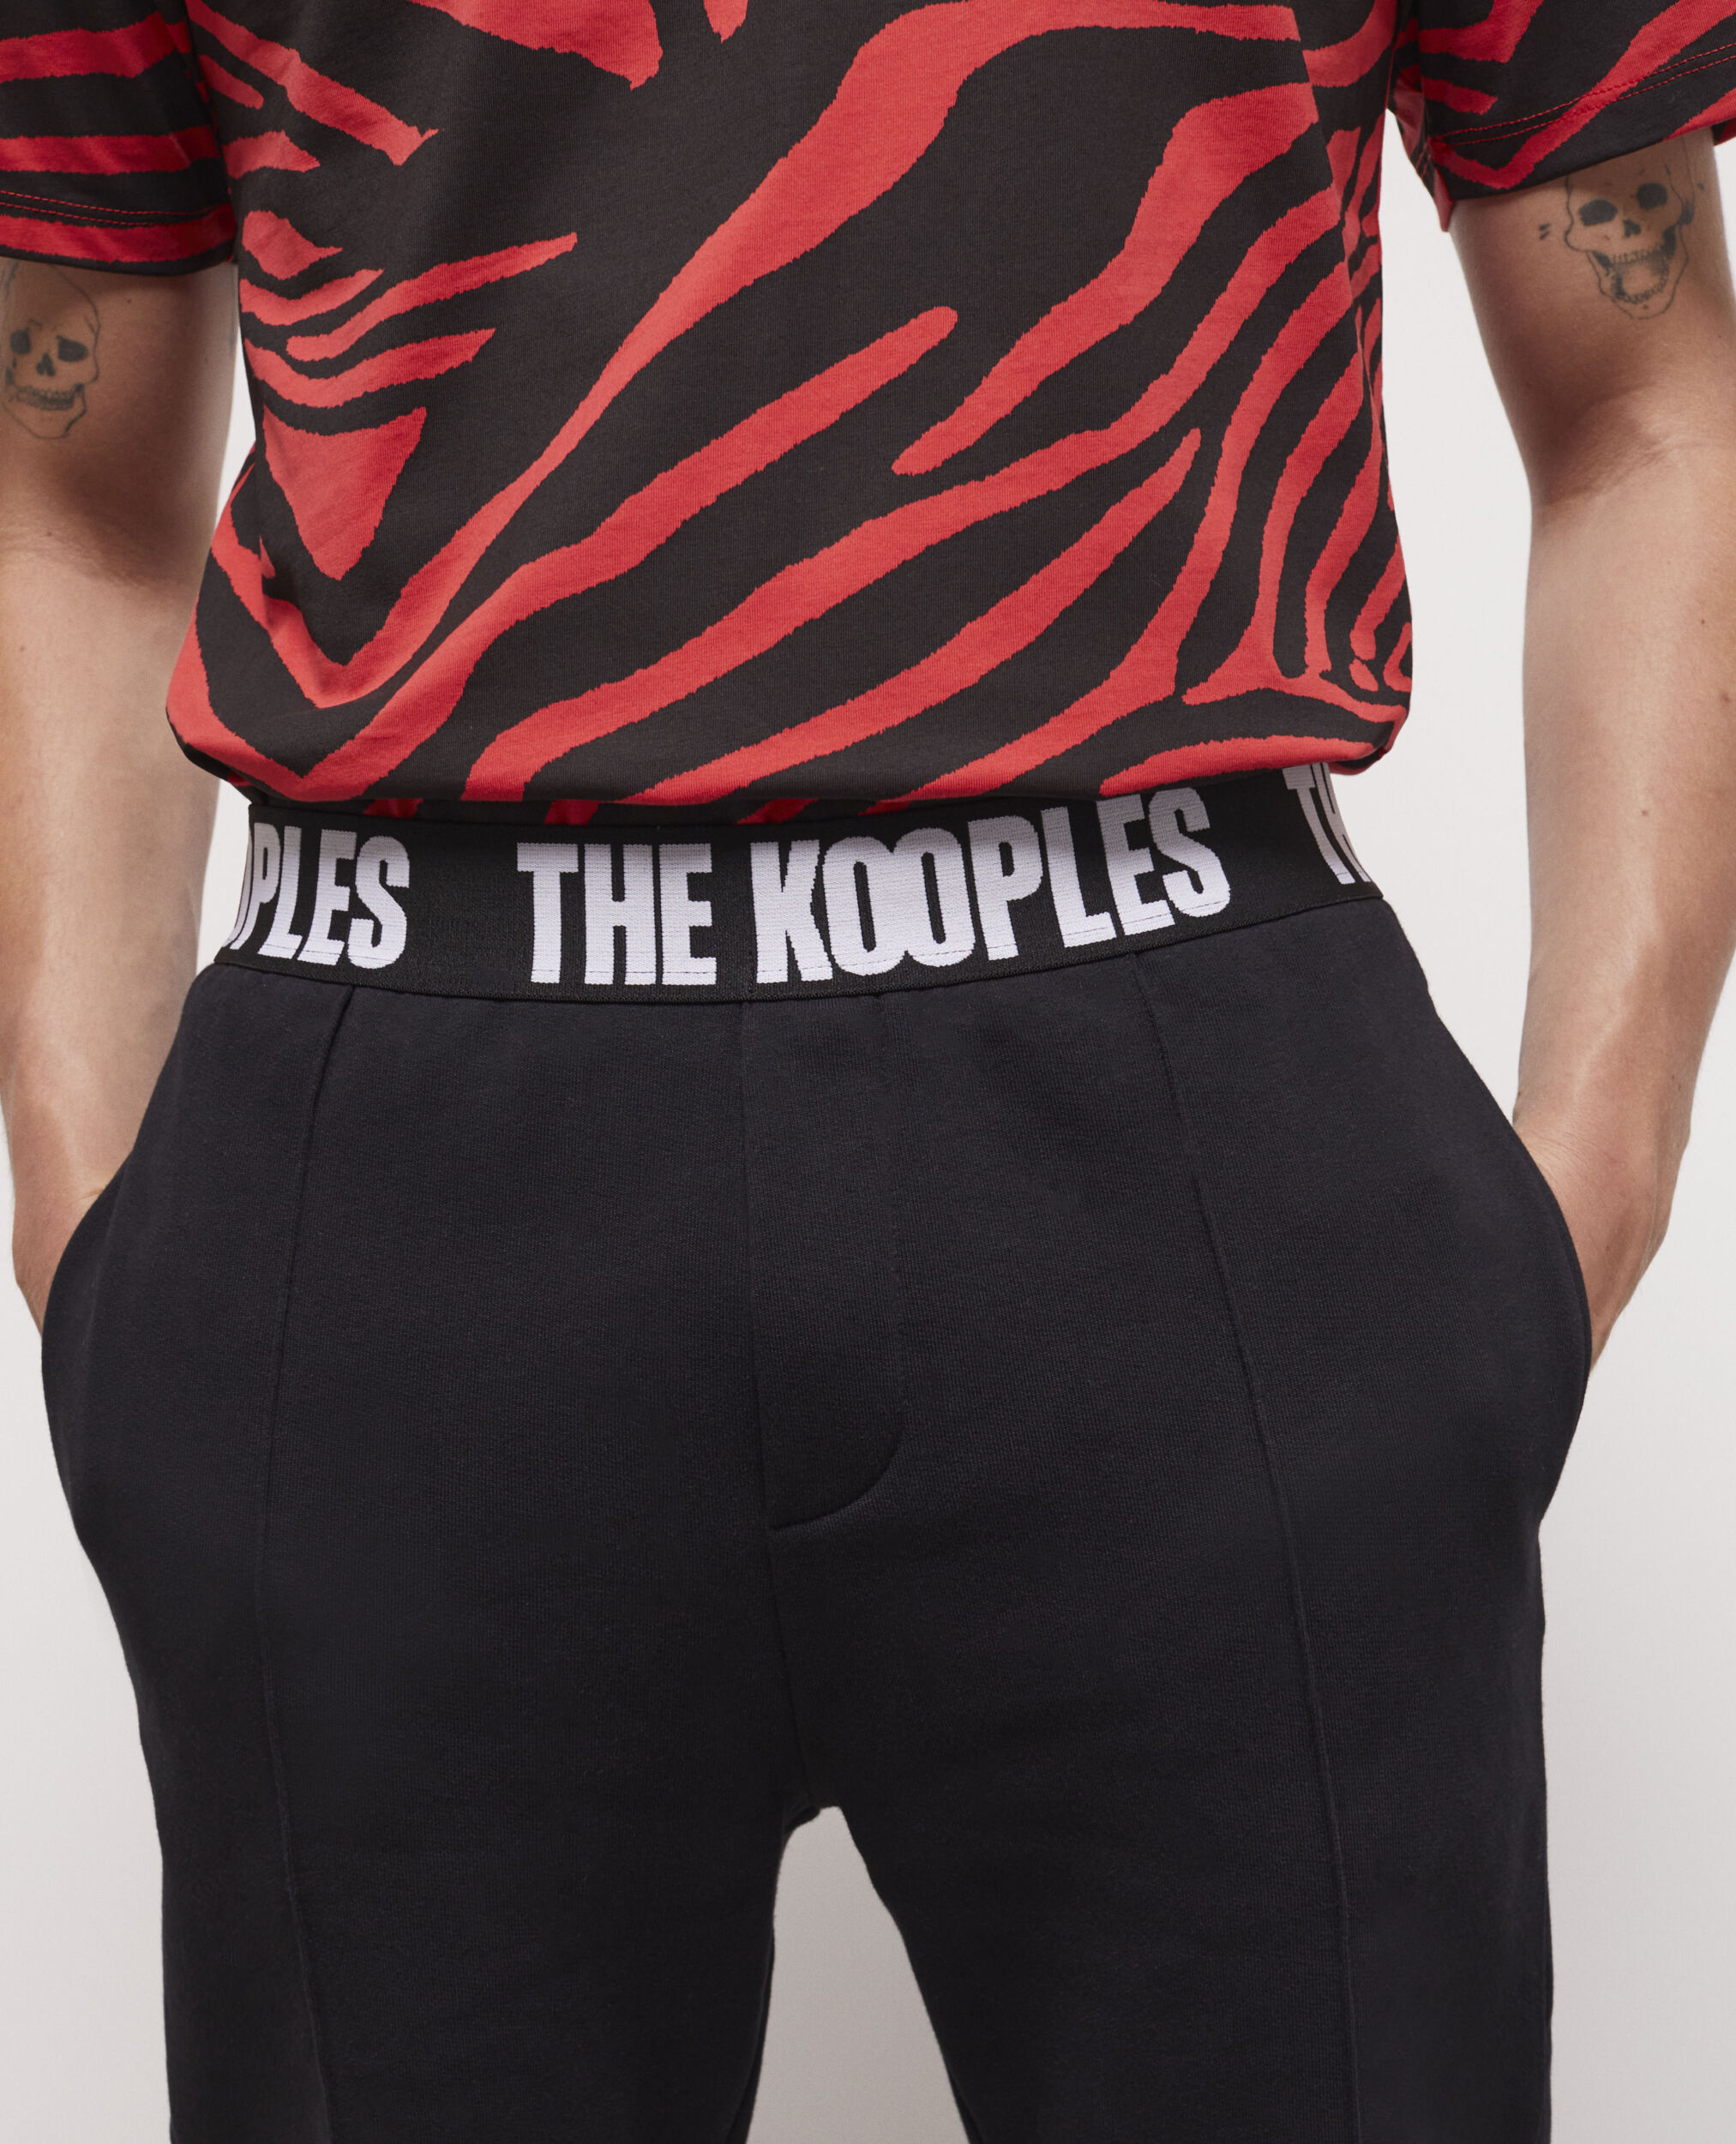 The Kooples black logo pants, BLACK, hi-res image number null